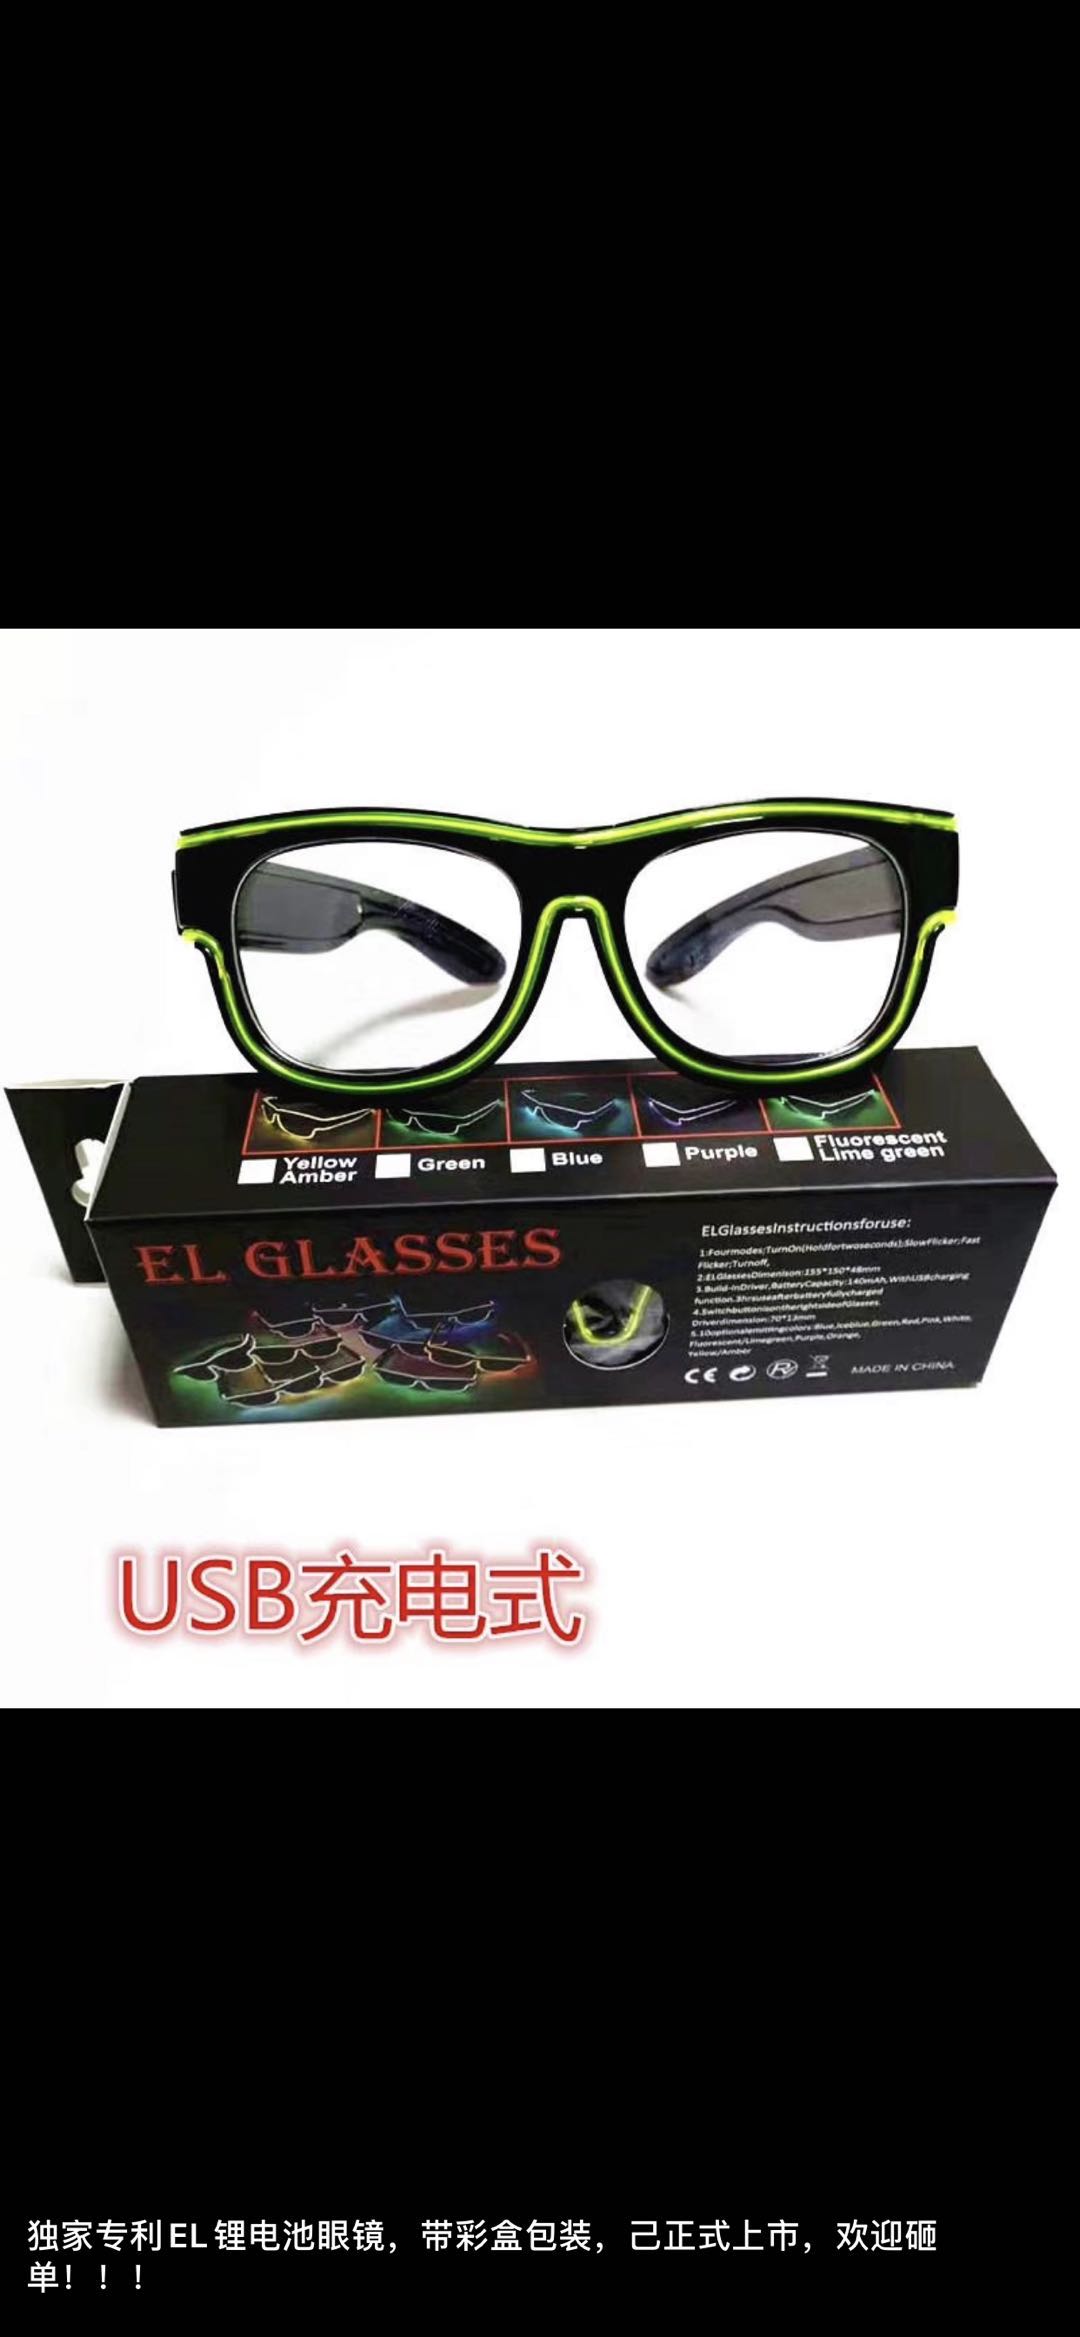 USB发光眼镜图